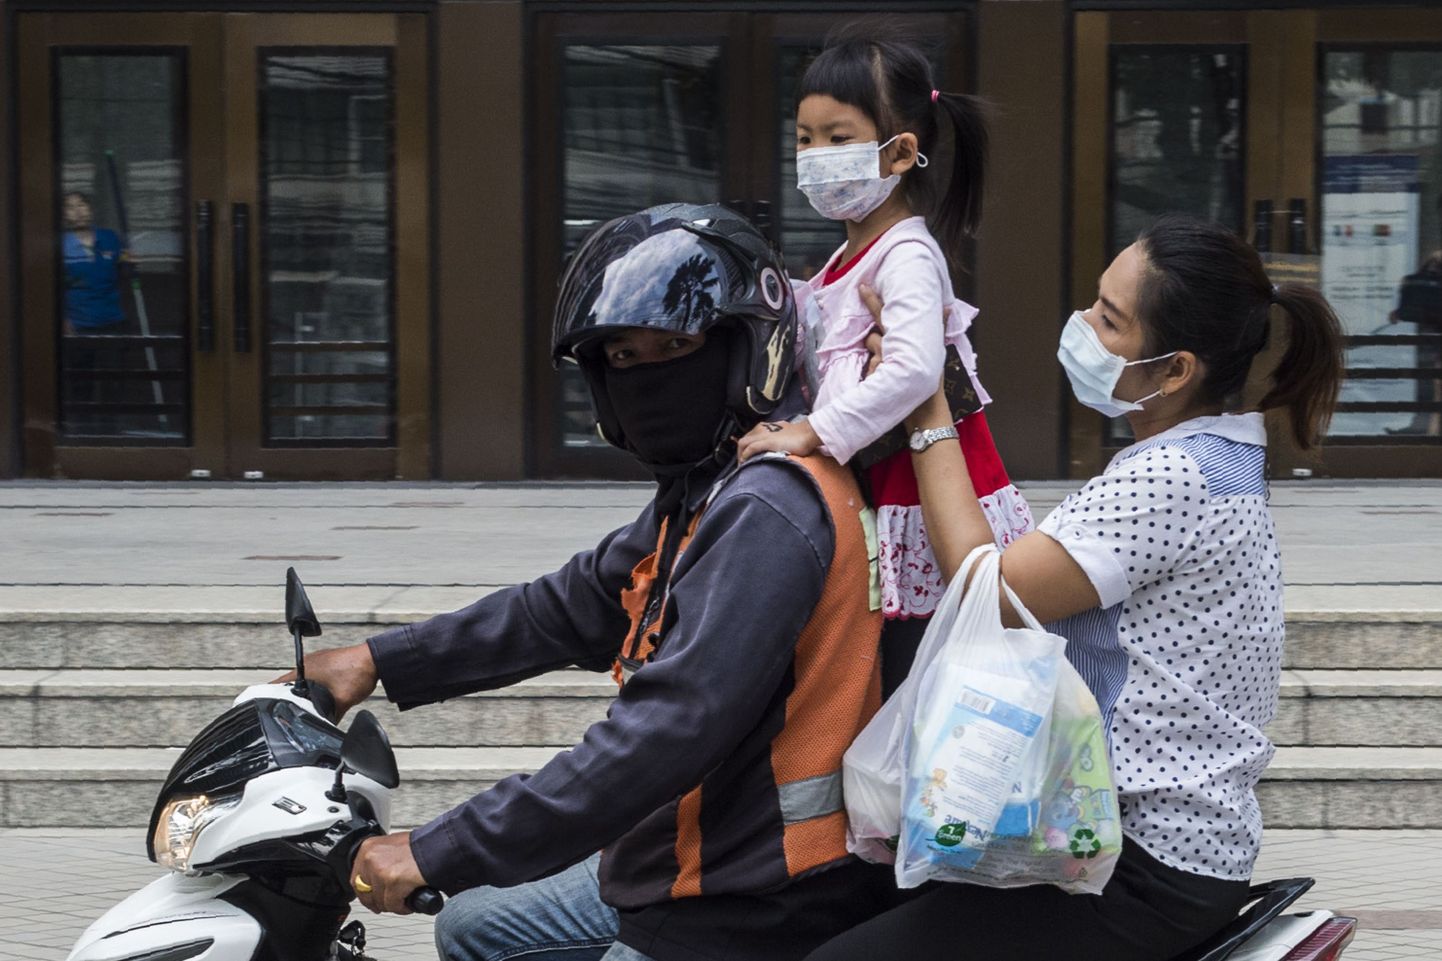 Bangkoki elanikud kandamas sudu tõttu näomaske.